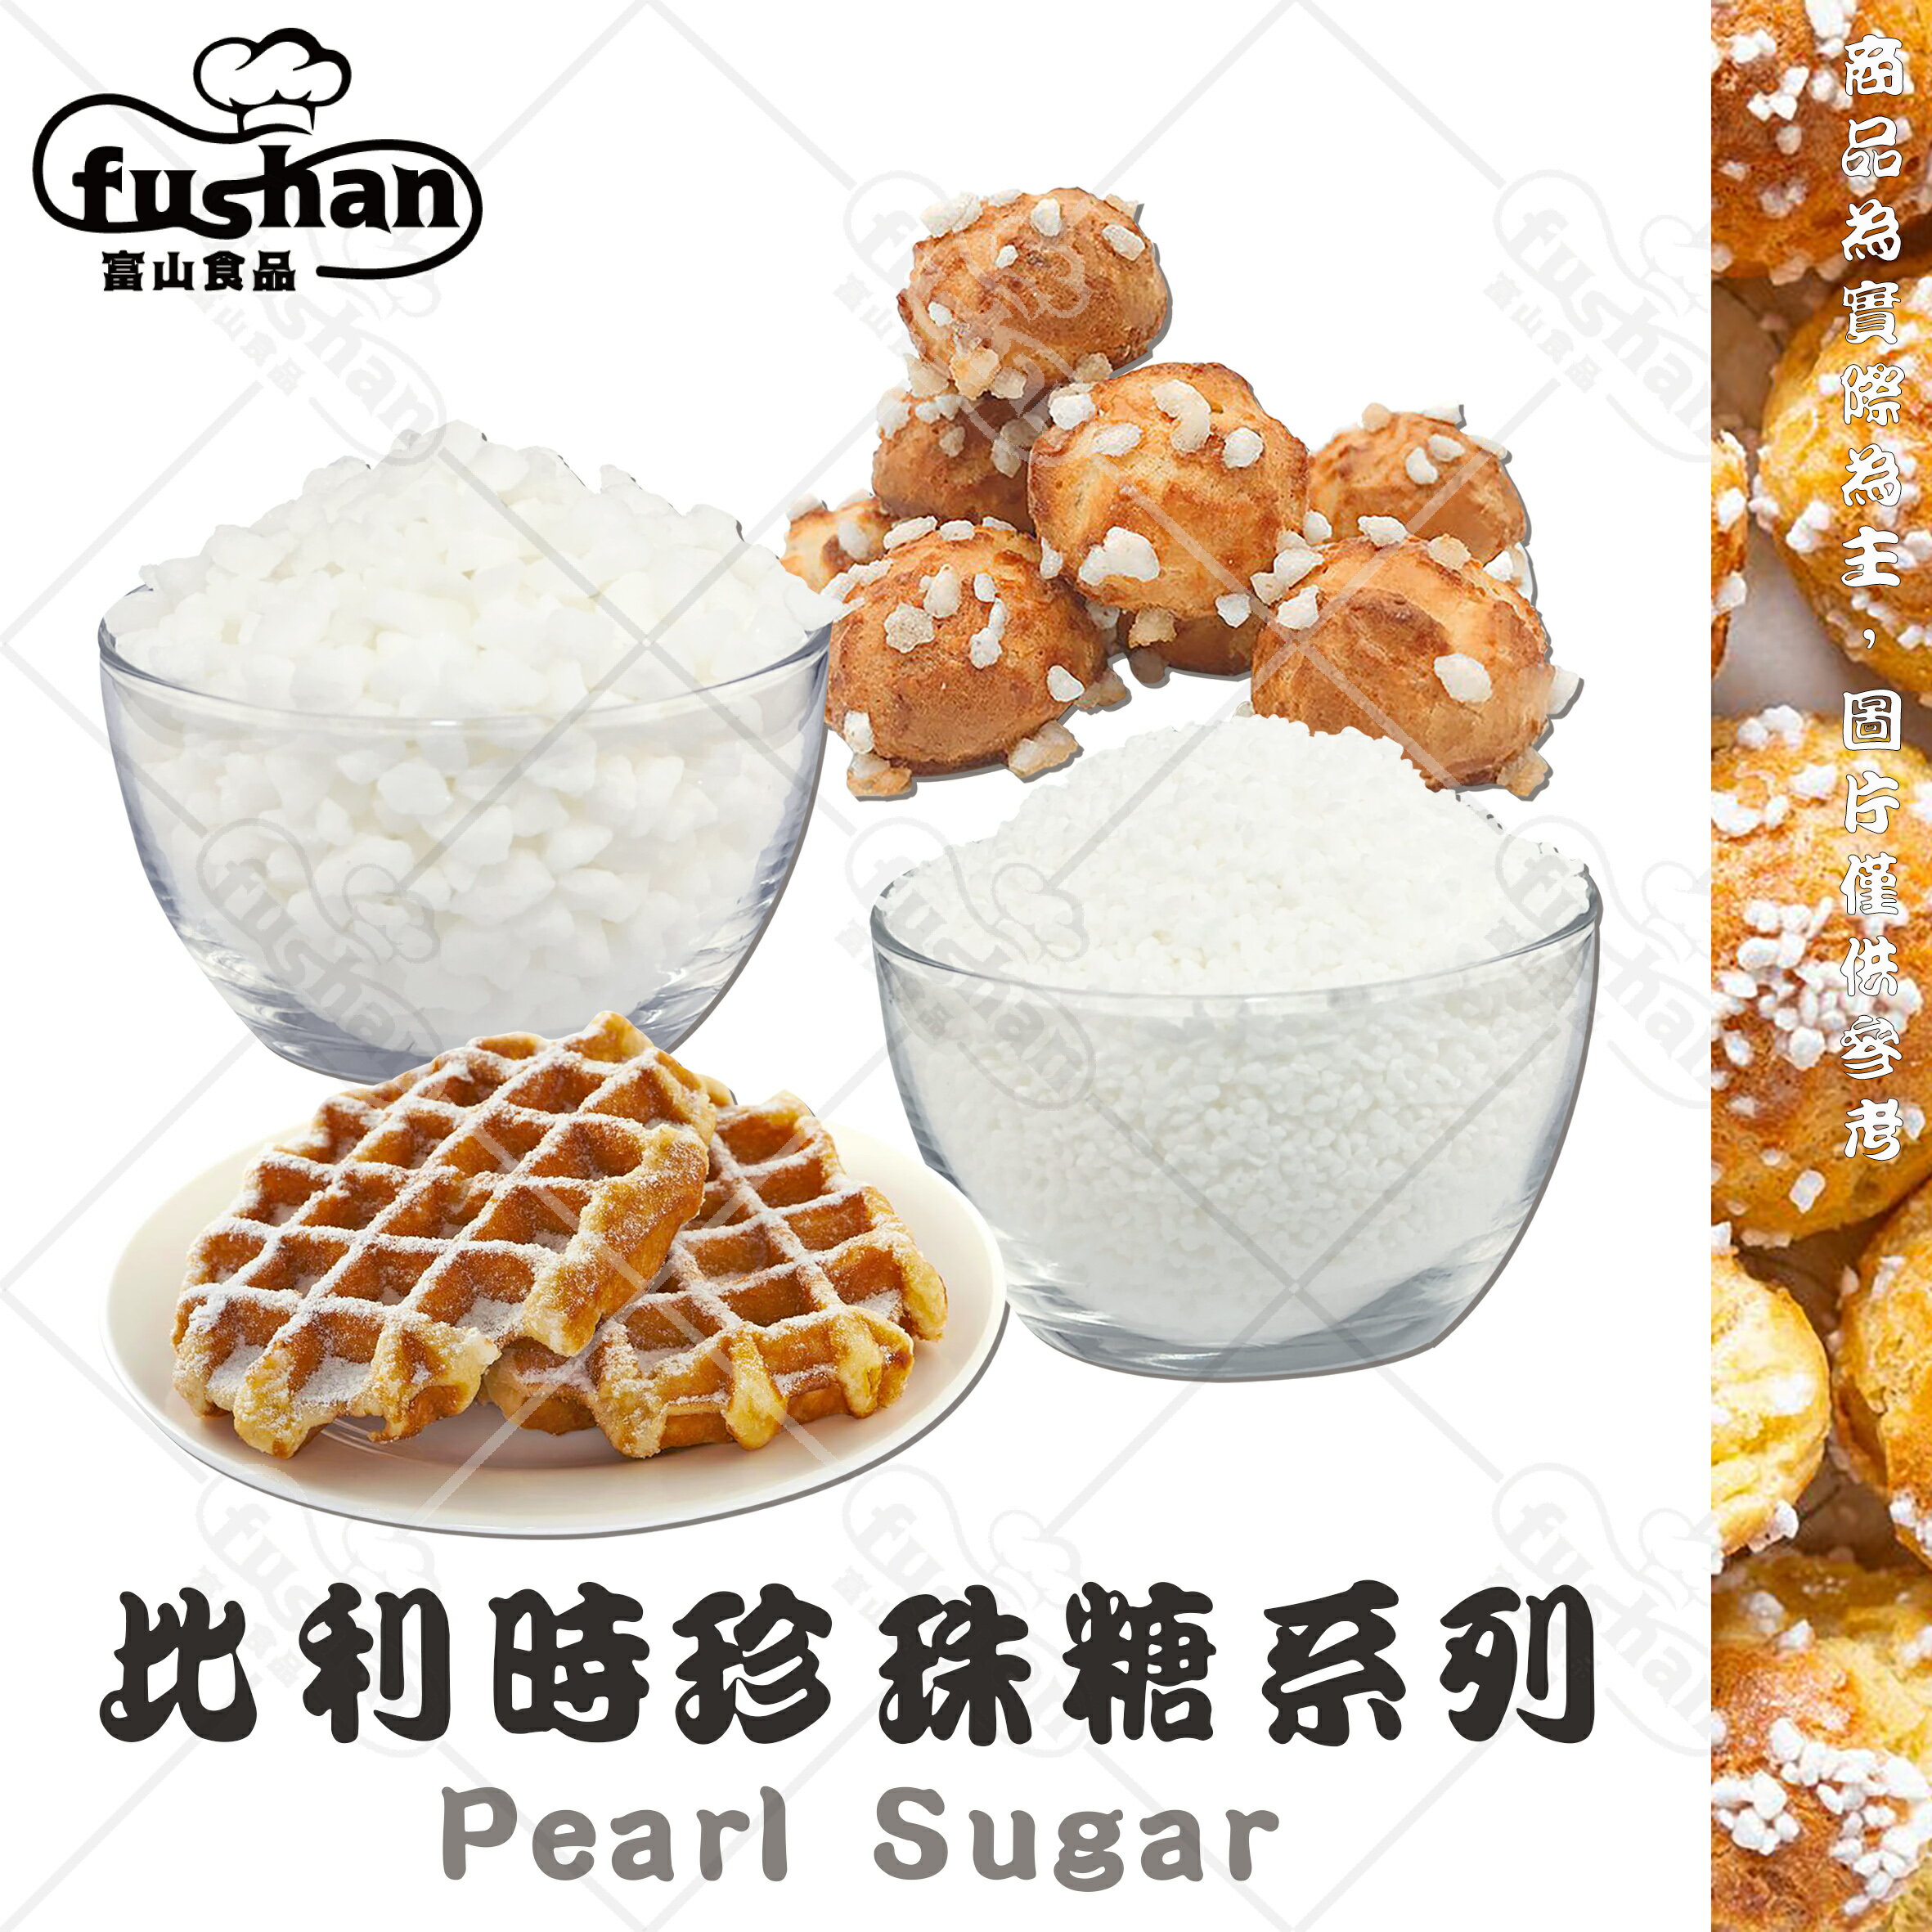 Pearl sugar (1kg) 